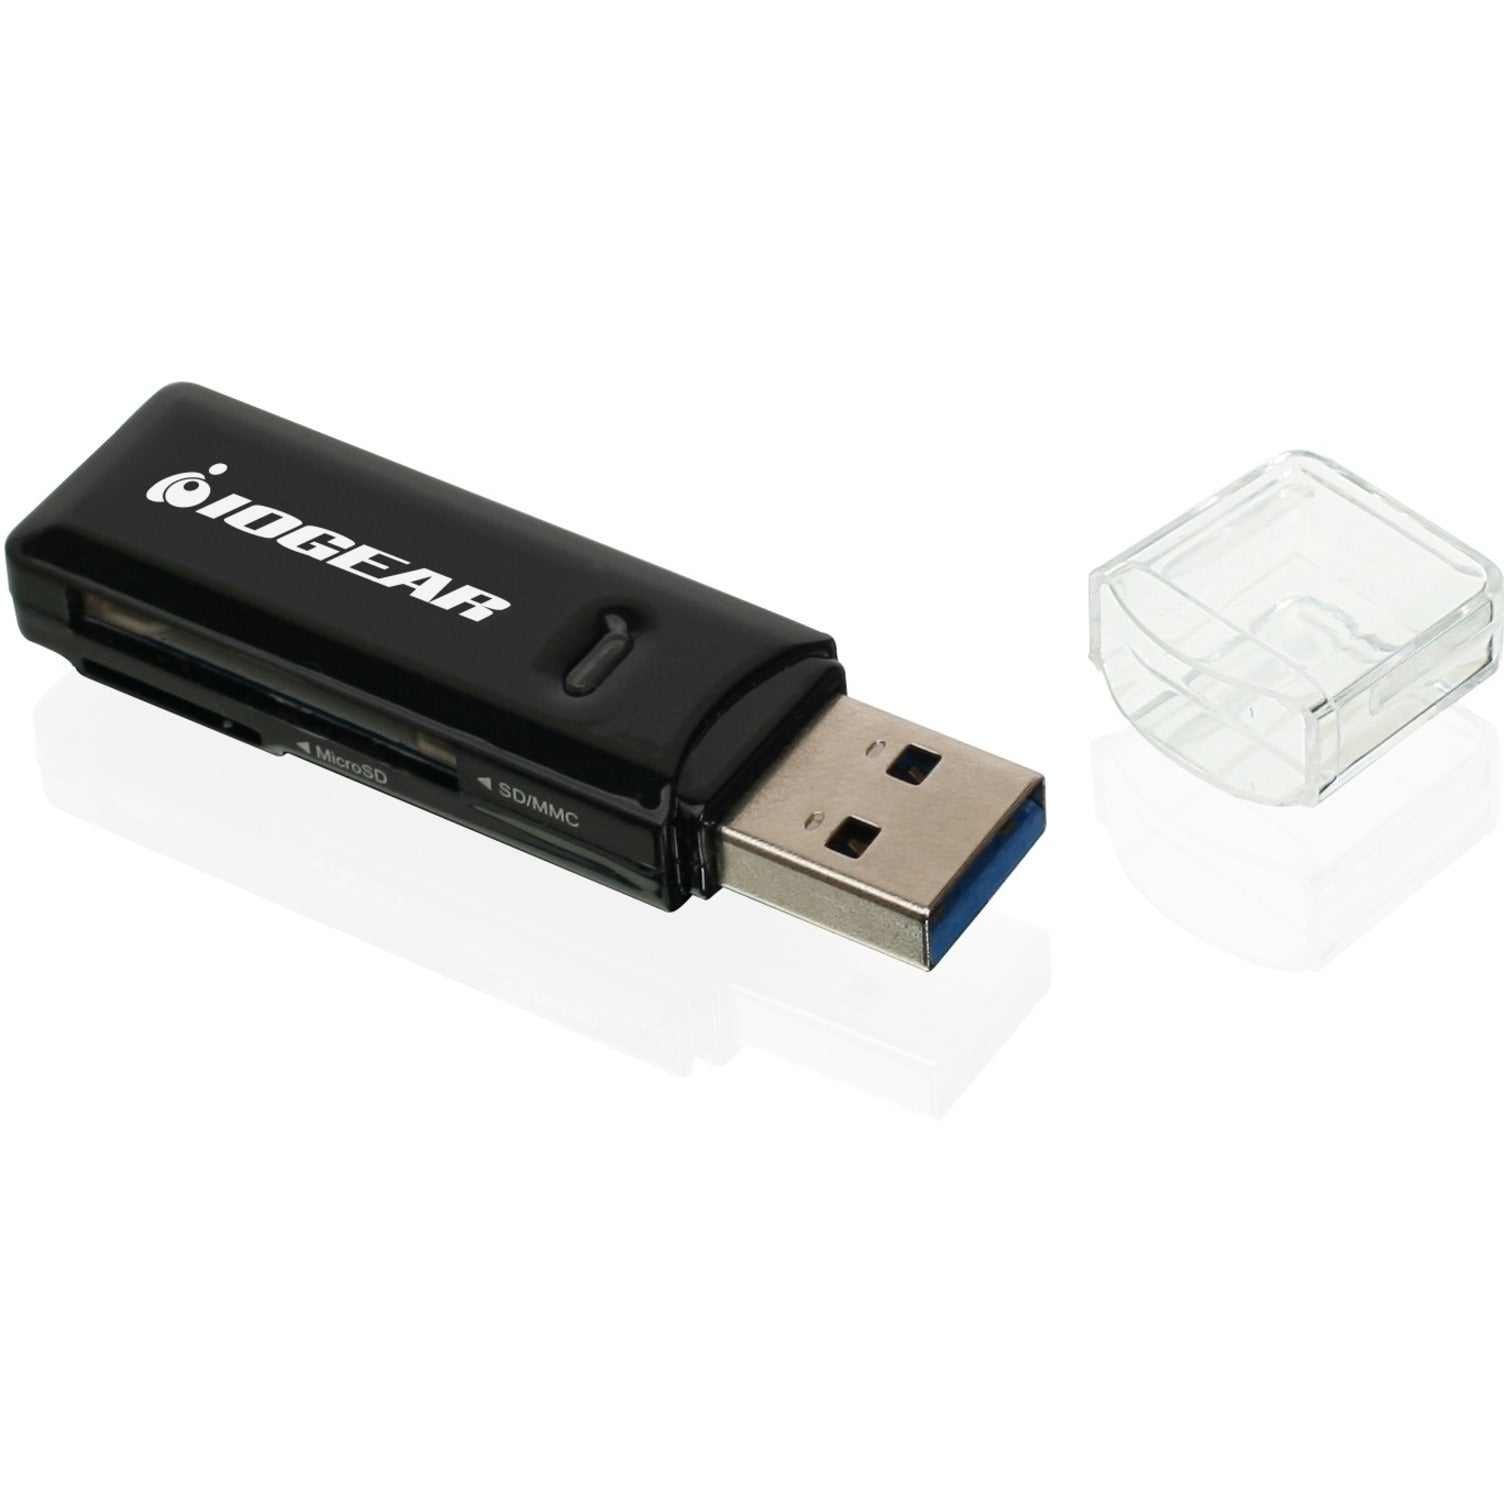 IOGEAR GFR305SD Compact USB 3.0 SDXC/MicroSDXC Card Reader/Writer, High-Speed Data Transfer and Easy File Management